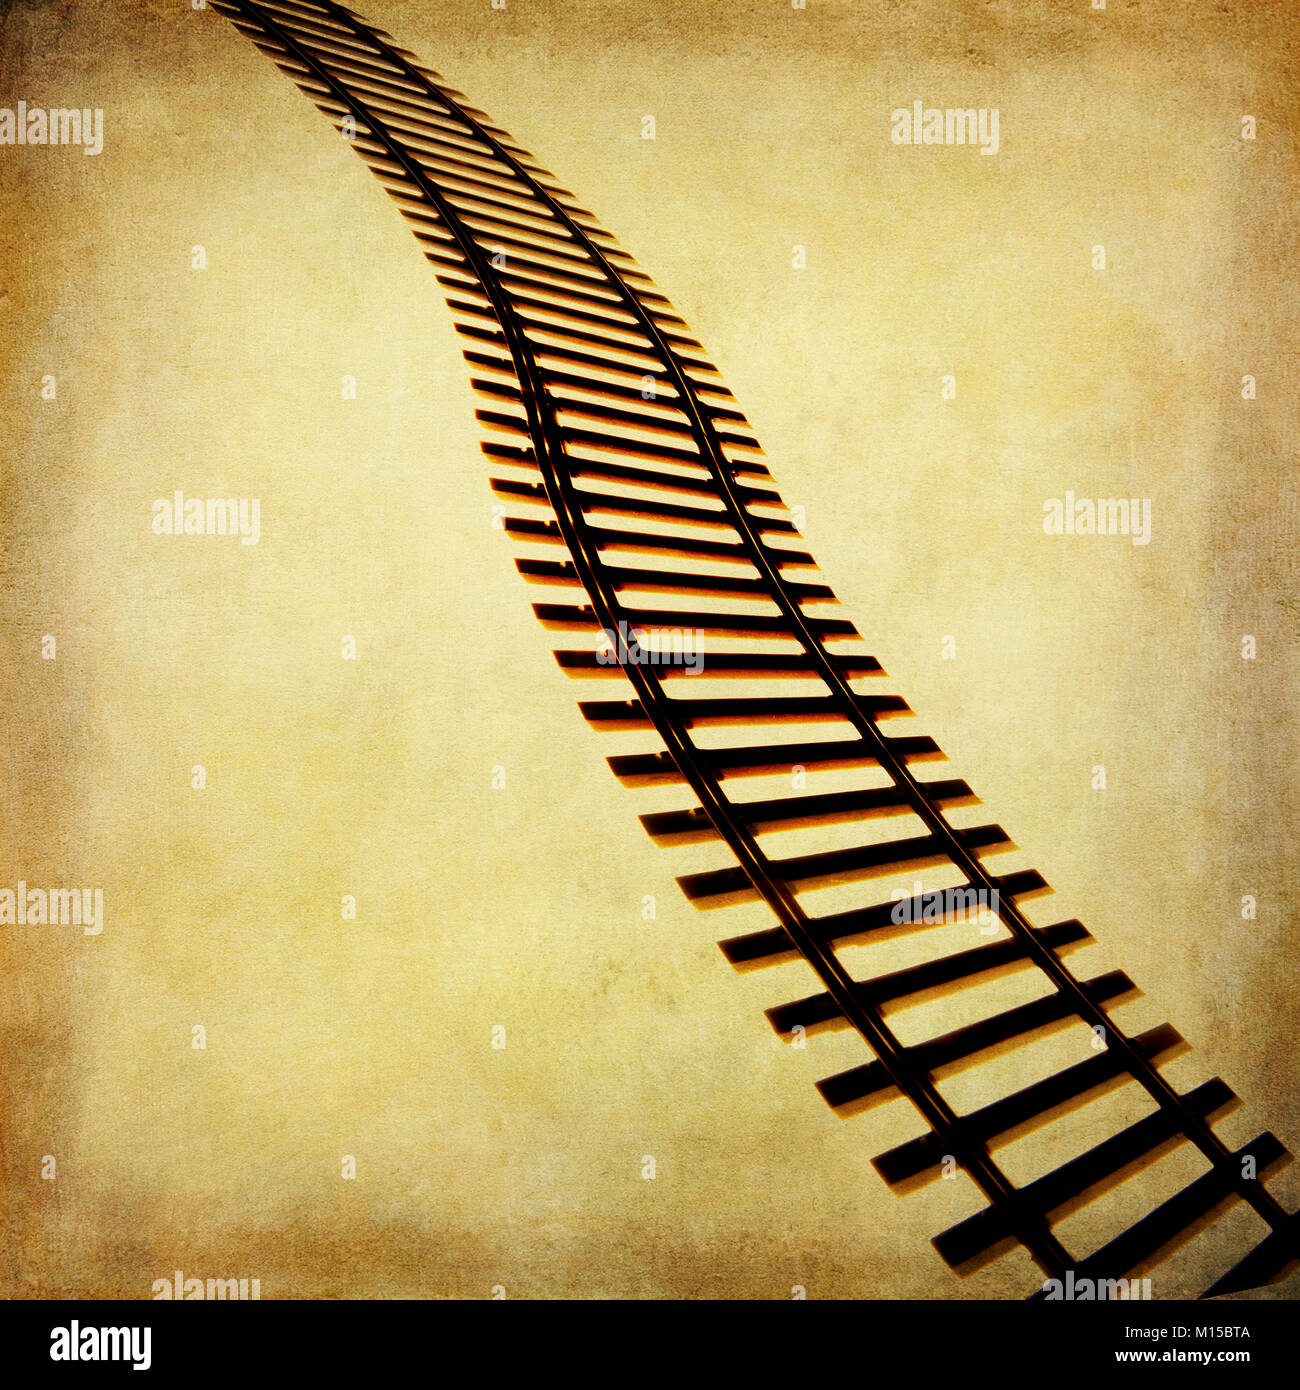 Illustration of train tracks Stock Photo